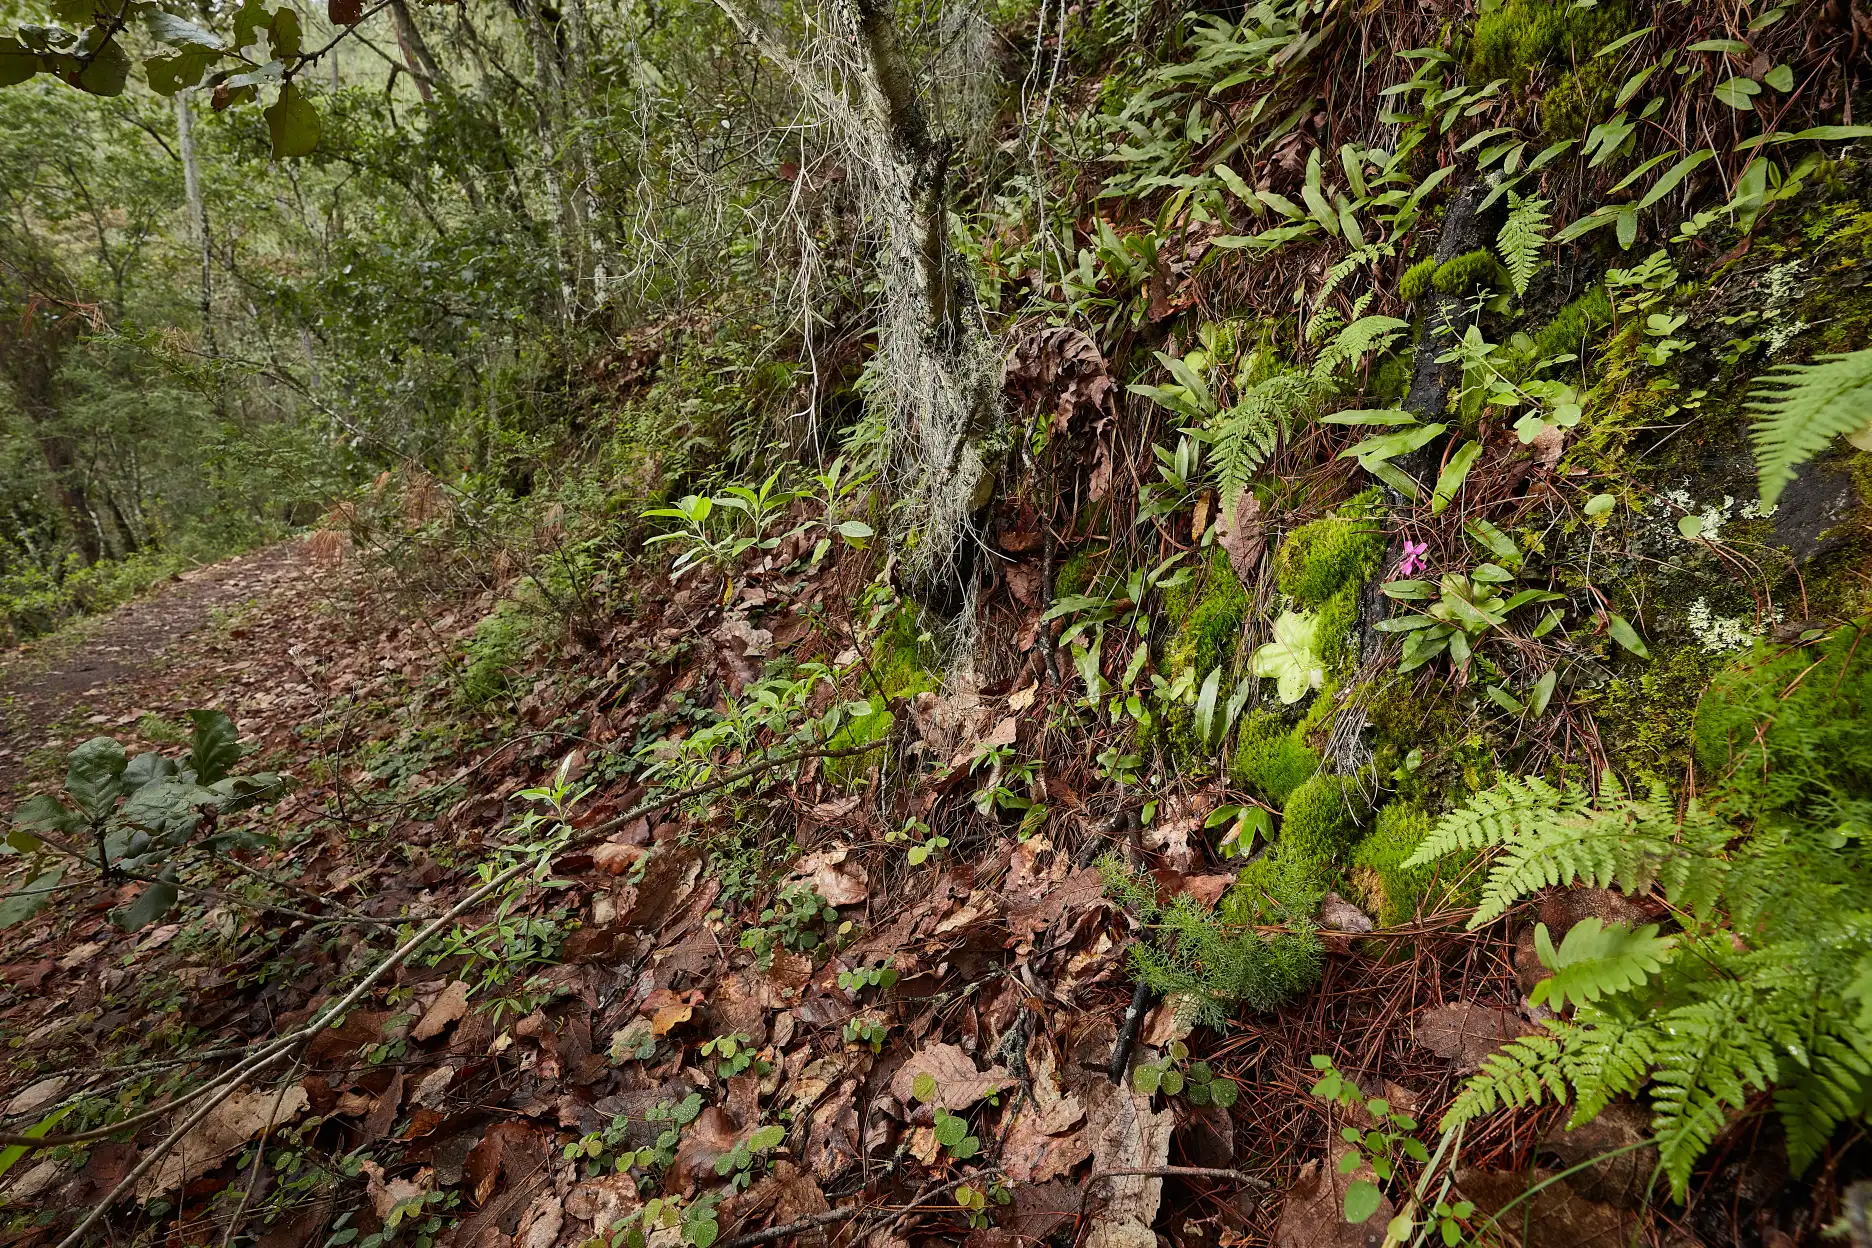 Pinguicula moranensis growing along a trail in the Ixtepeji region of Oaxaca, Mexico.